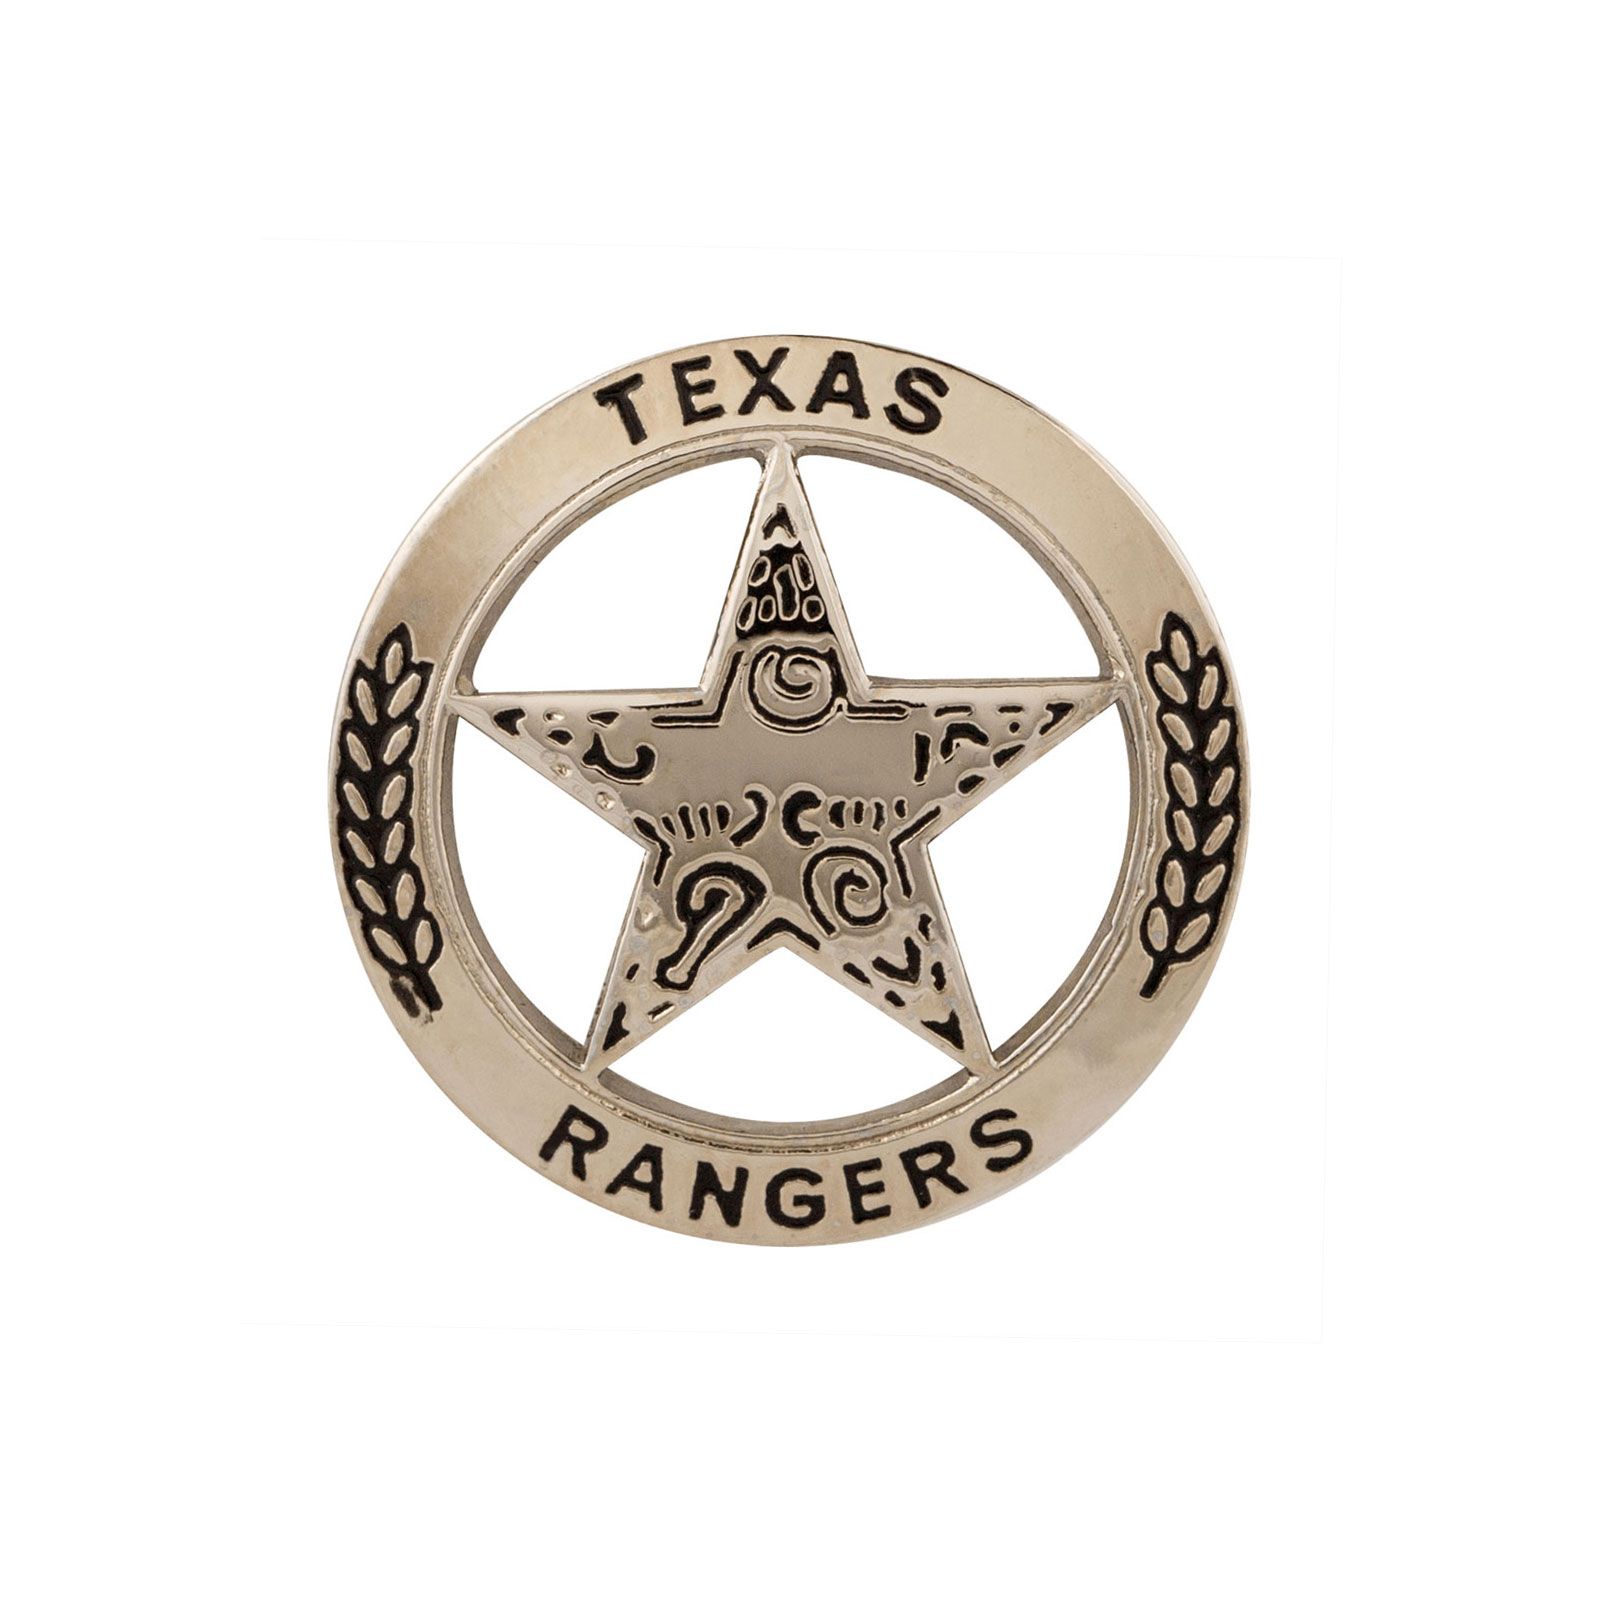 Texas Rangers, Law Enforcement